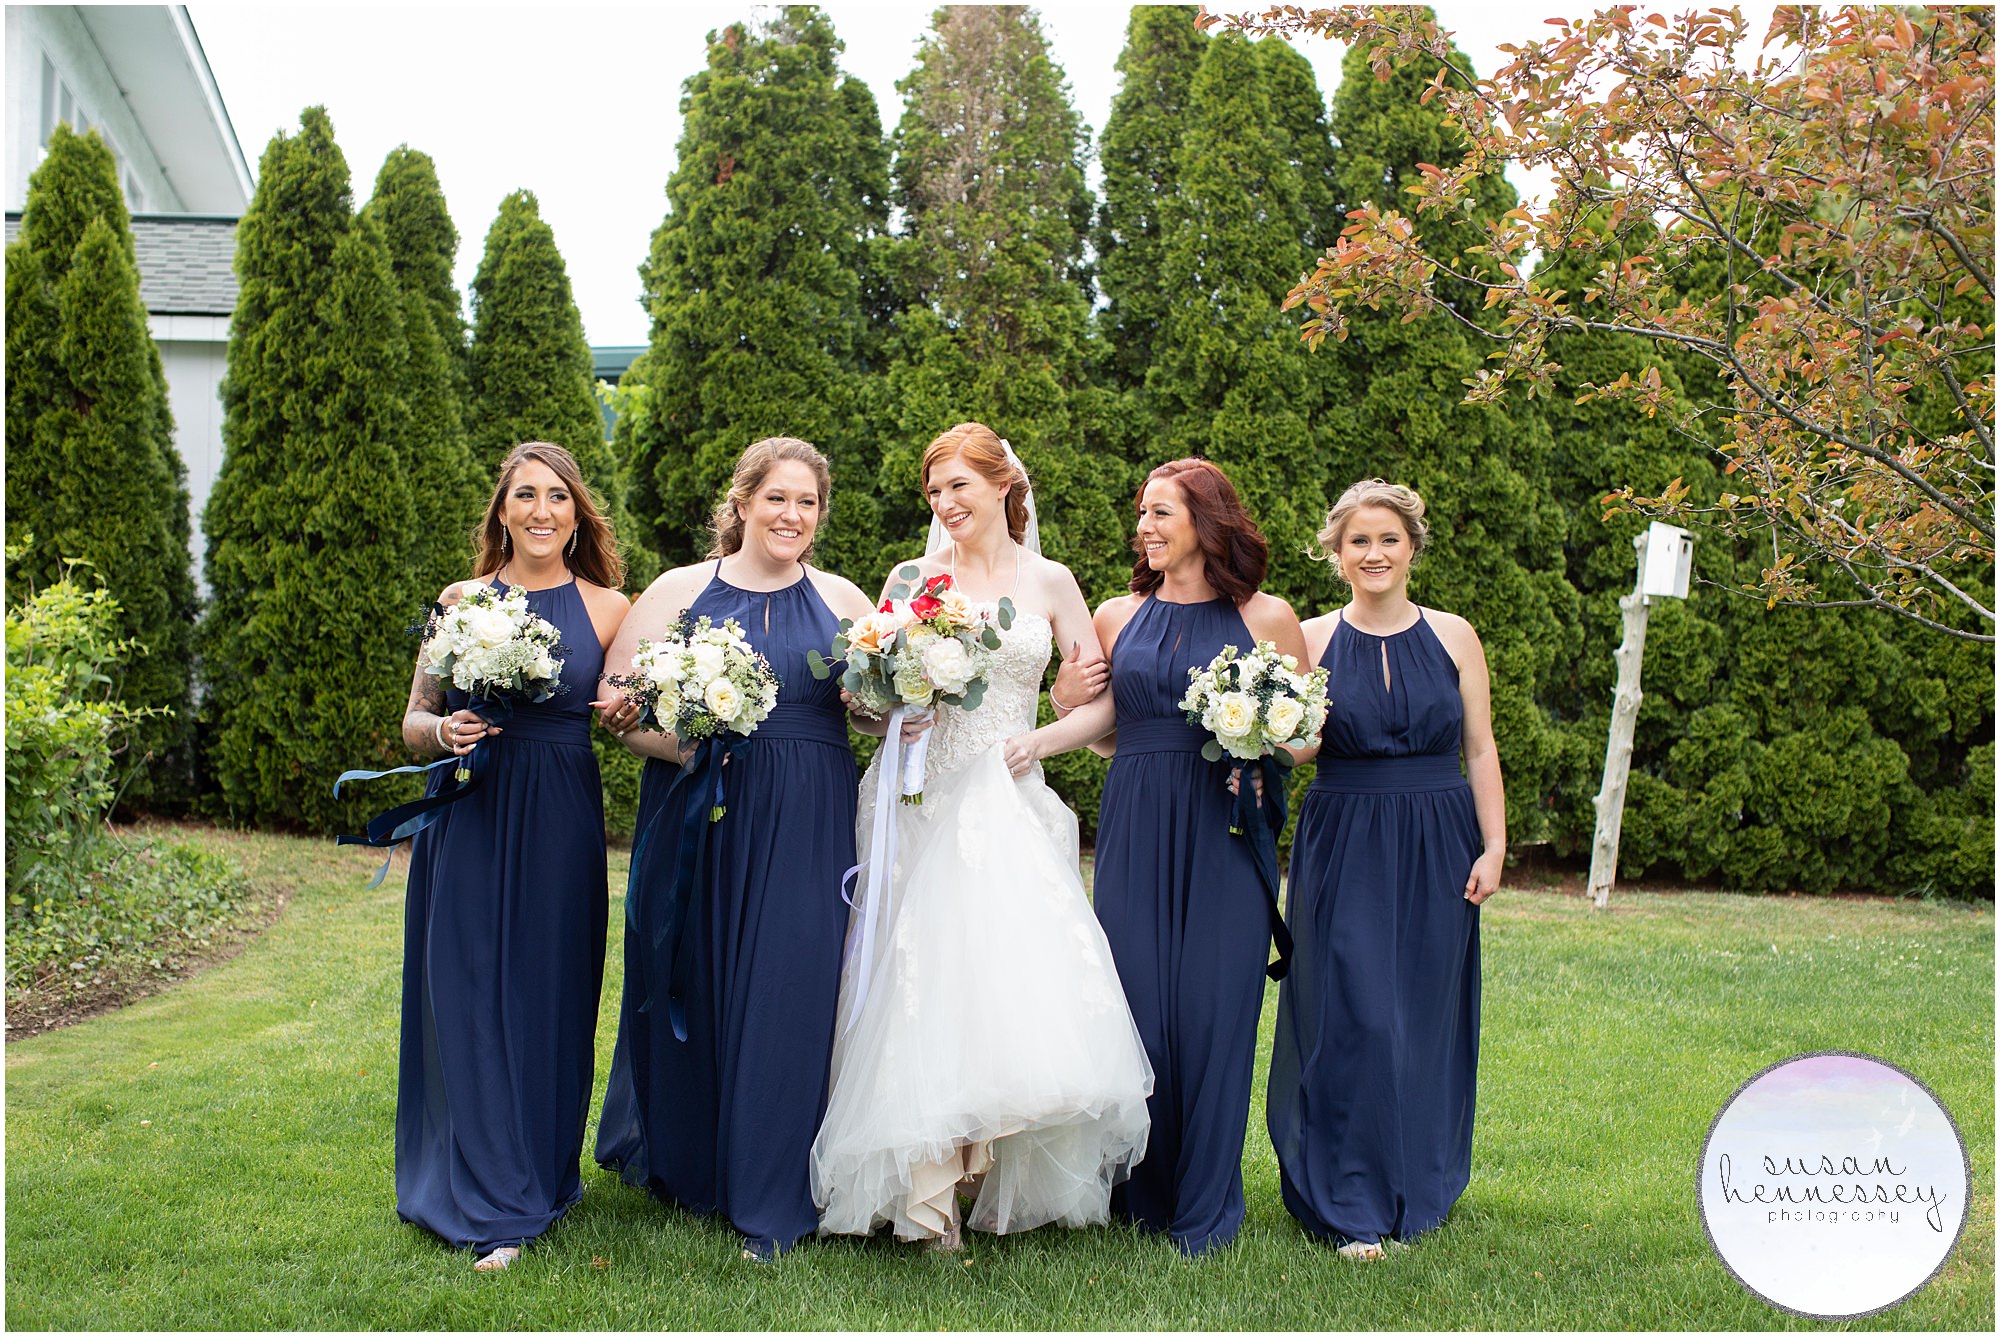 Bride and bridesmaids in navy blue